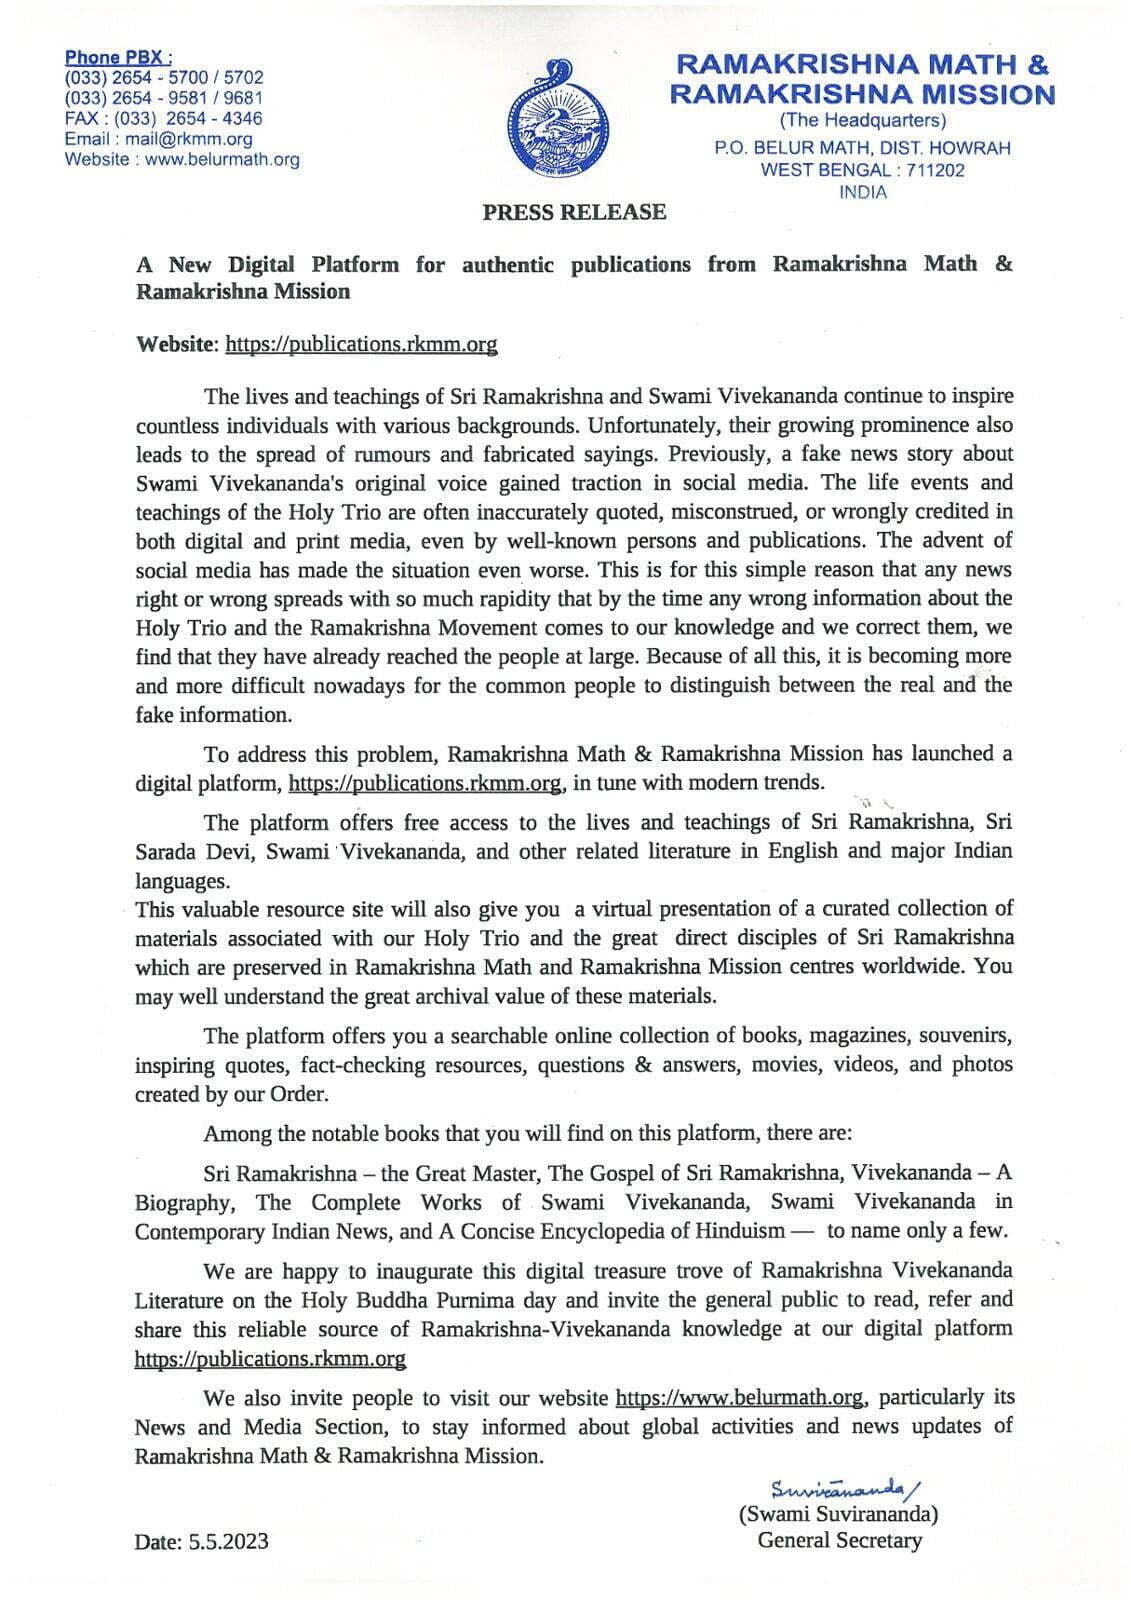 Belur Math Press Release - 05 May 2023